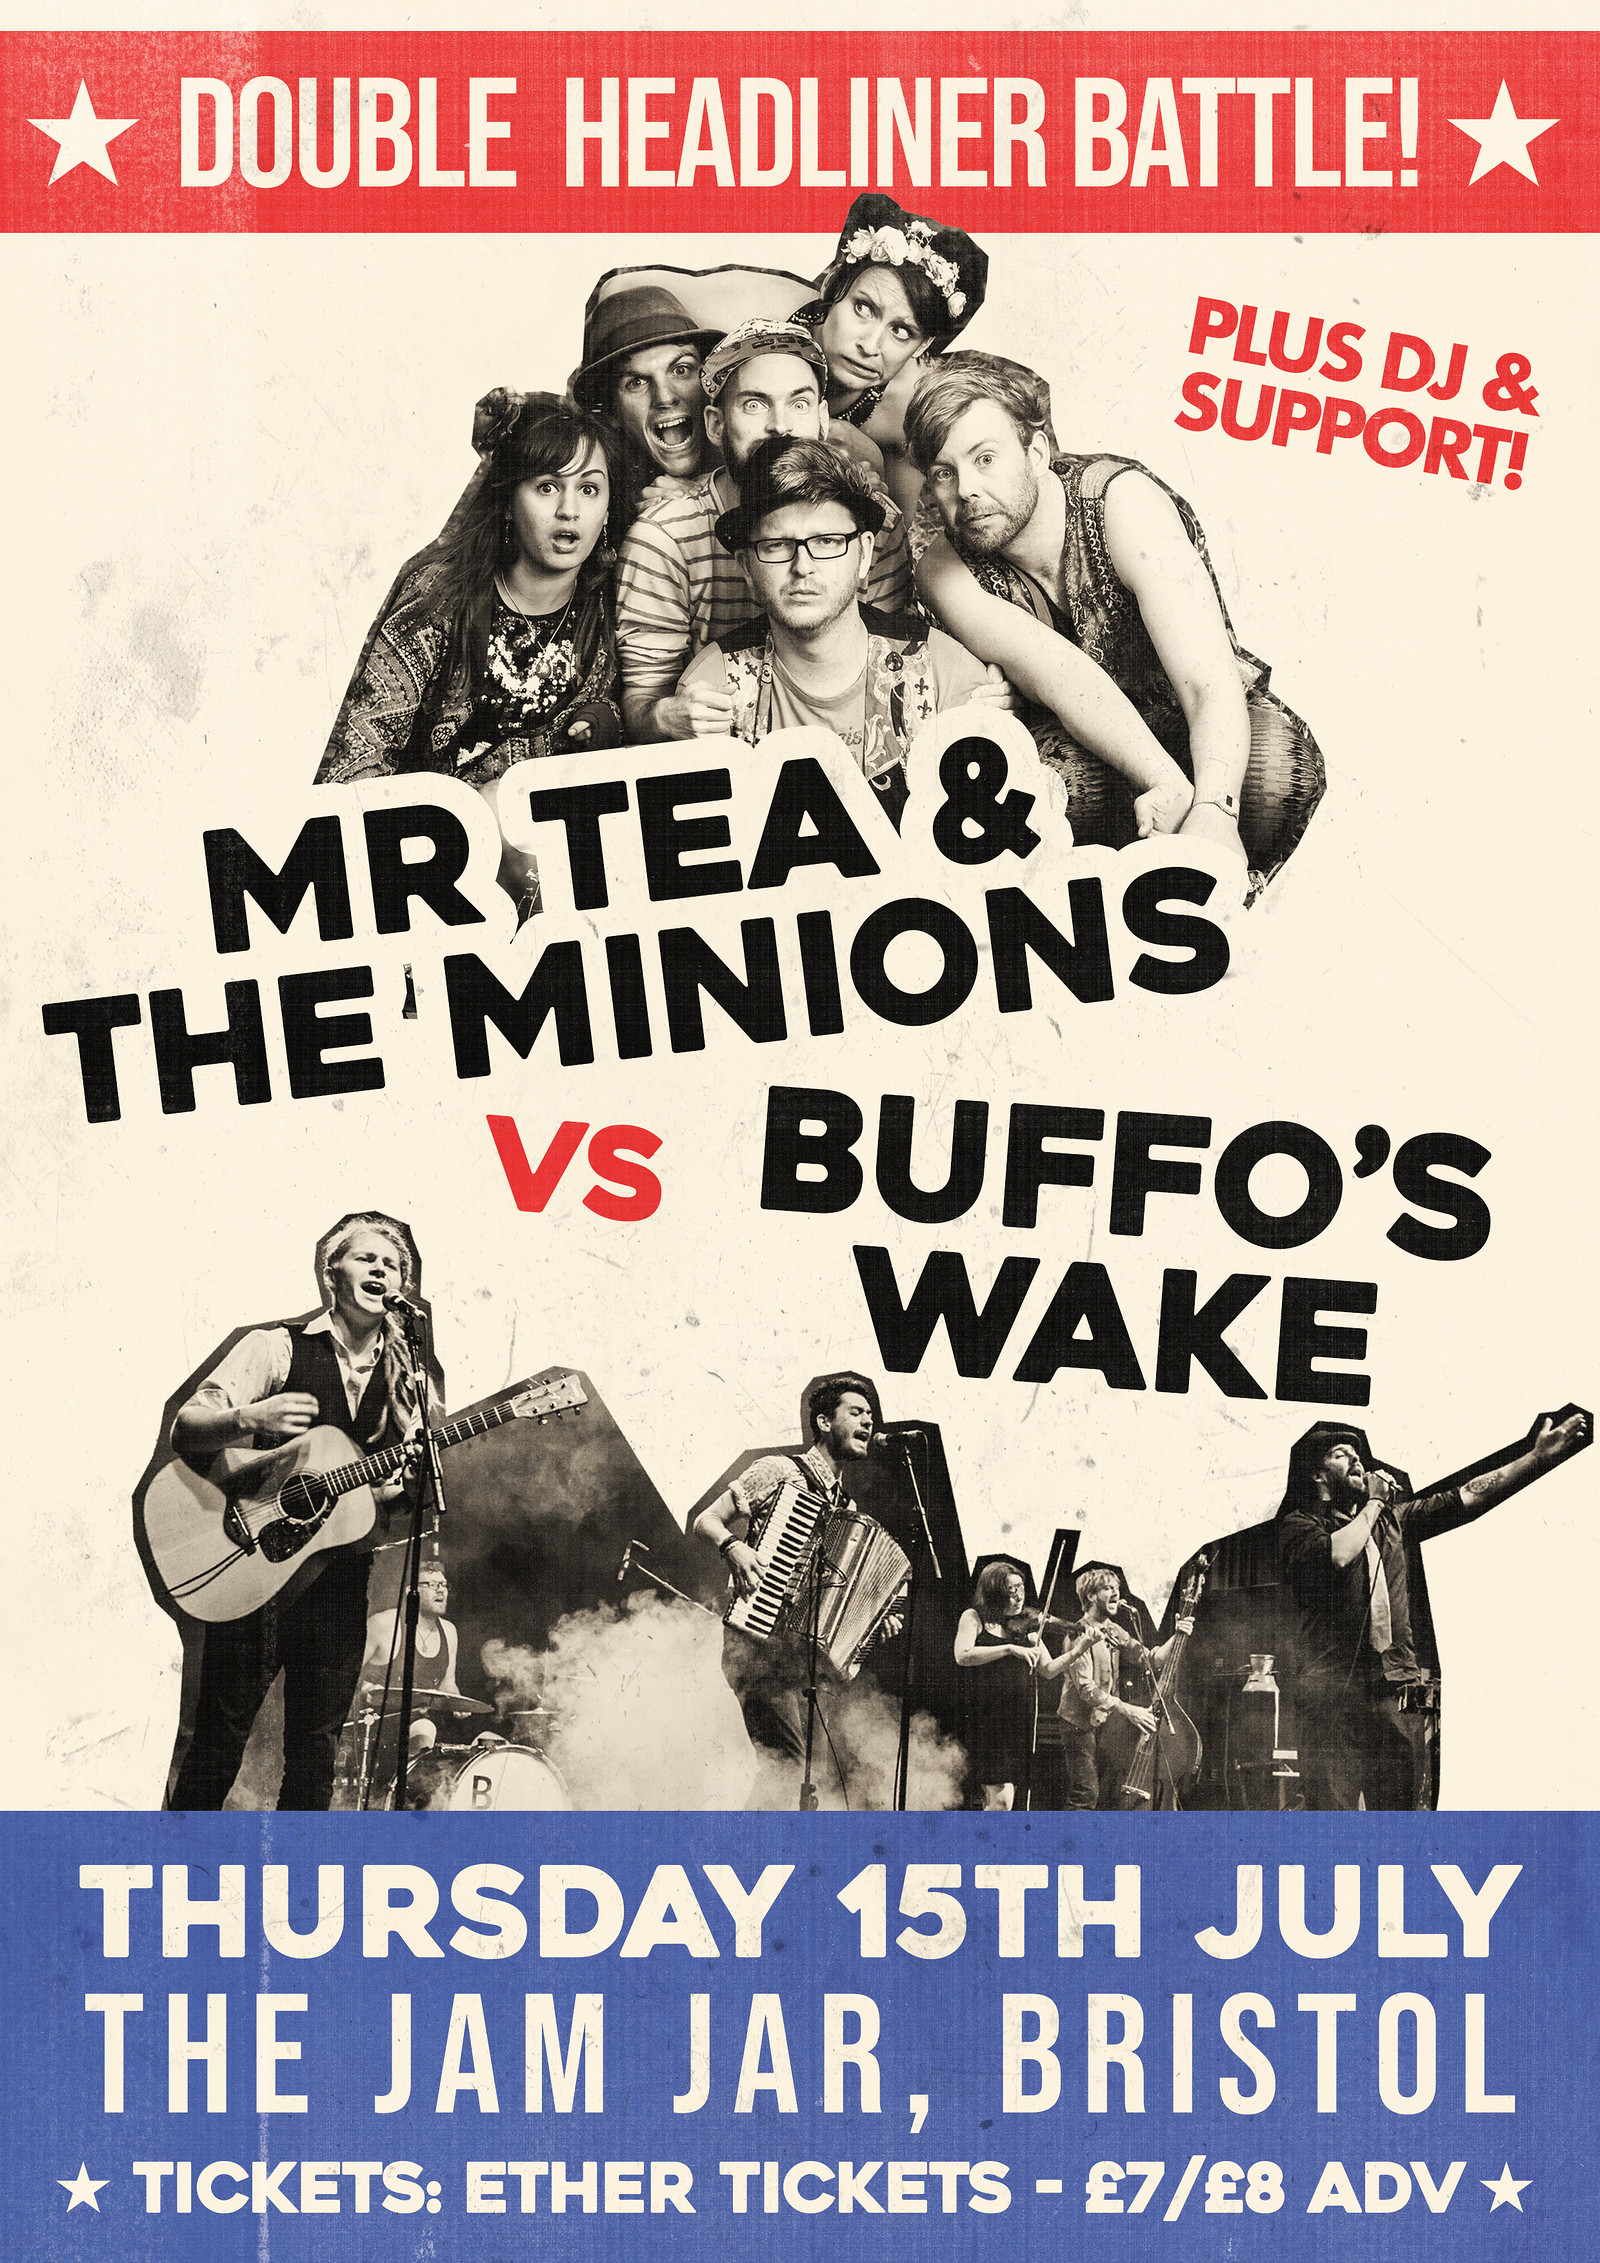 Mr Tea & the Minions VS Buffo's Wake - Battle at Jam Jar